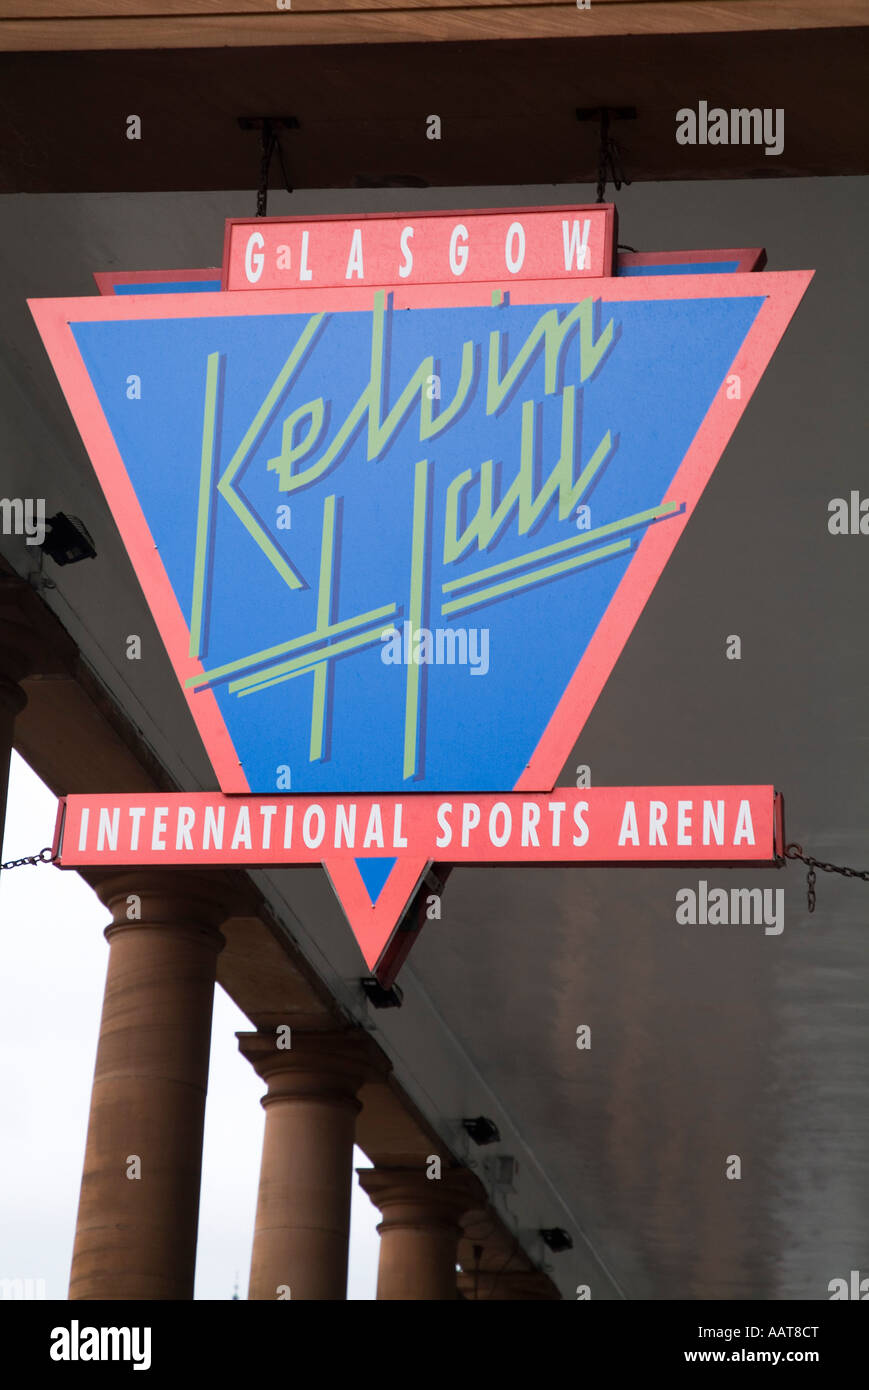 dh Kelvin Hall KELVINGROVE GLASGOW International Sports Arena sign outside entrance Stock Photo